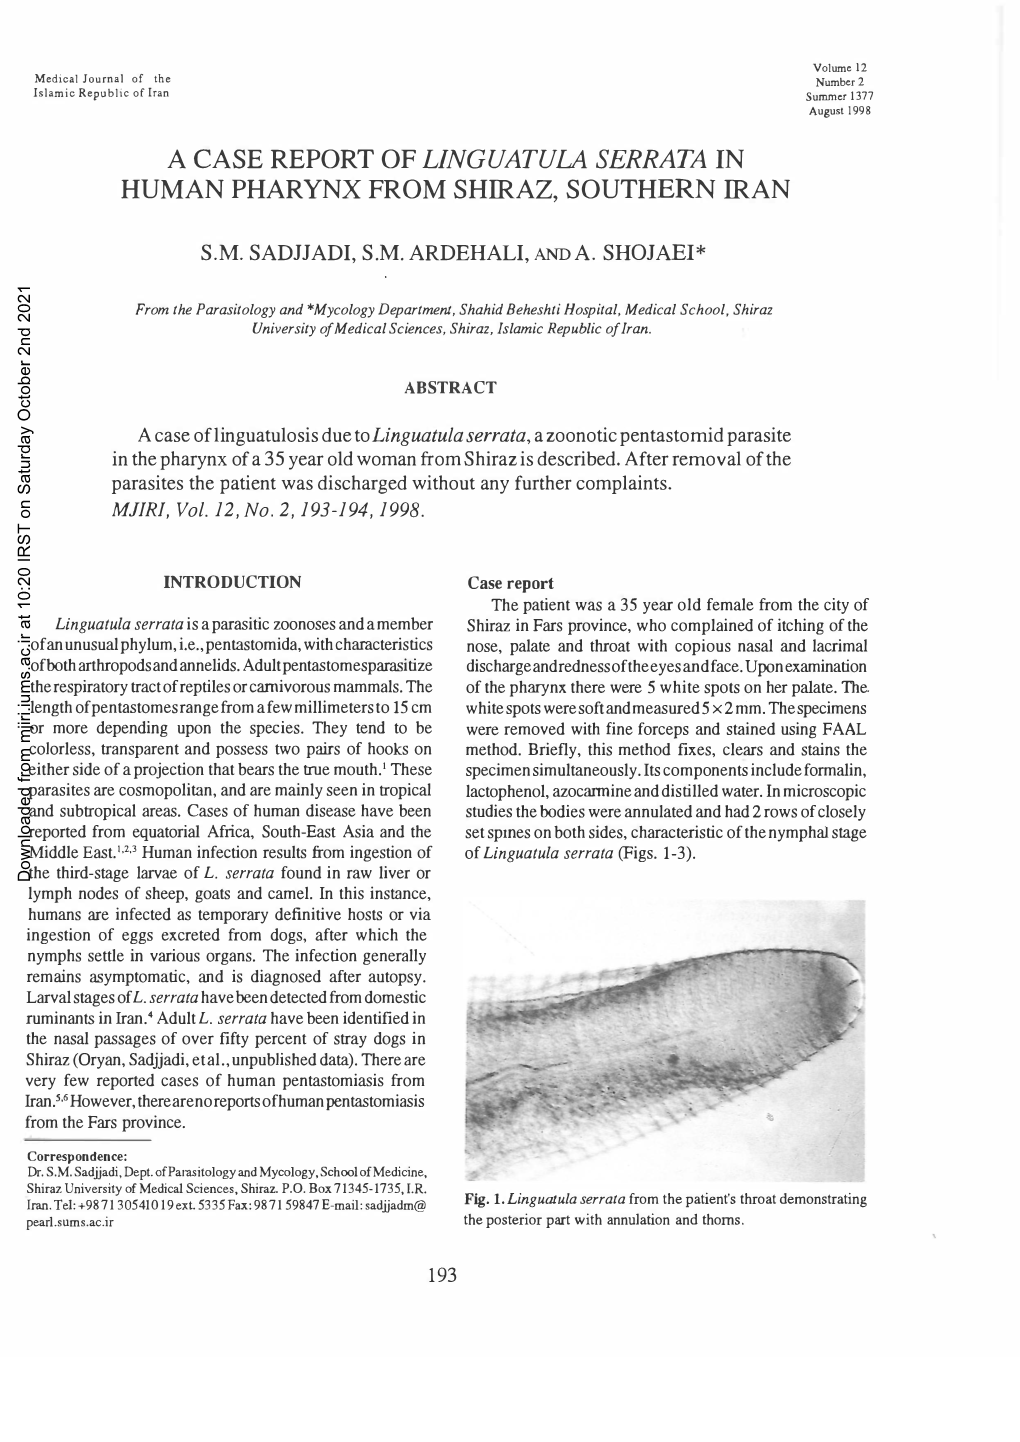 A Case Report of Linguatula Serrata in Human Pharynx from Shiraz, Southern Iran